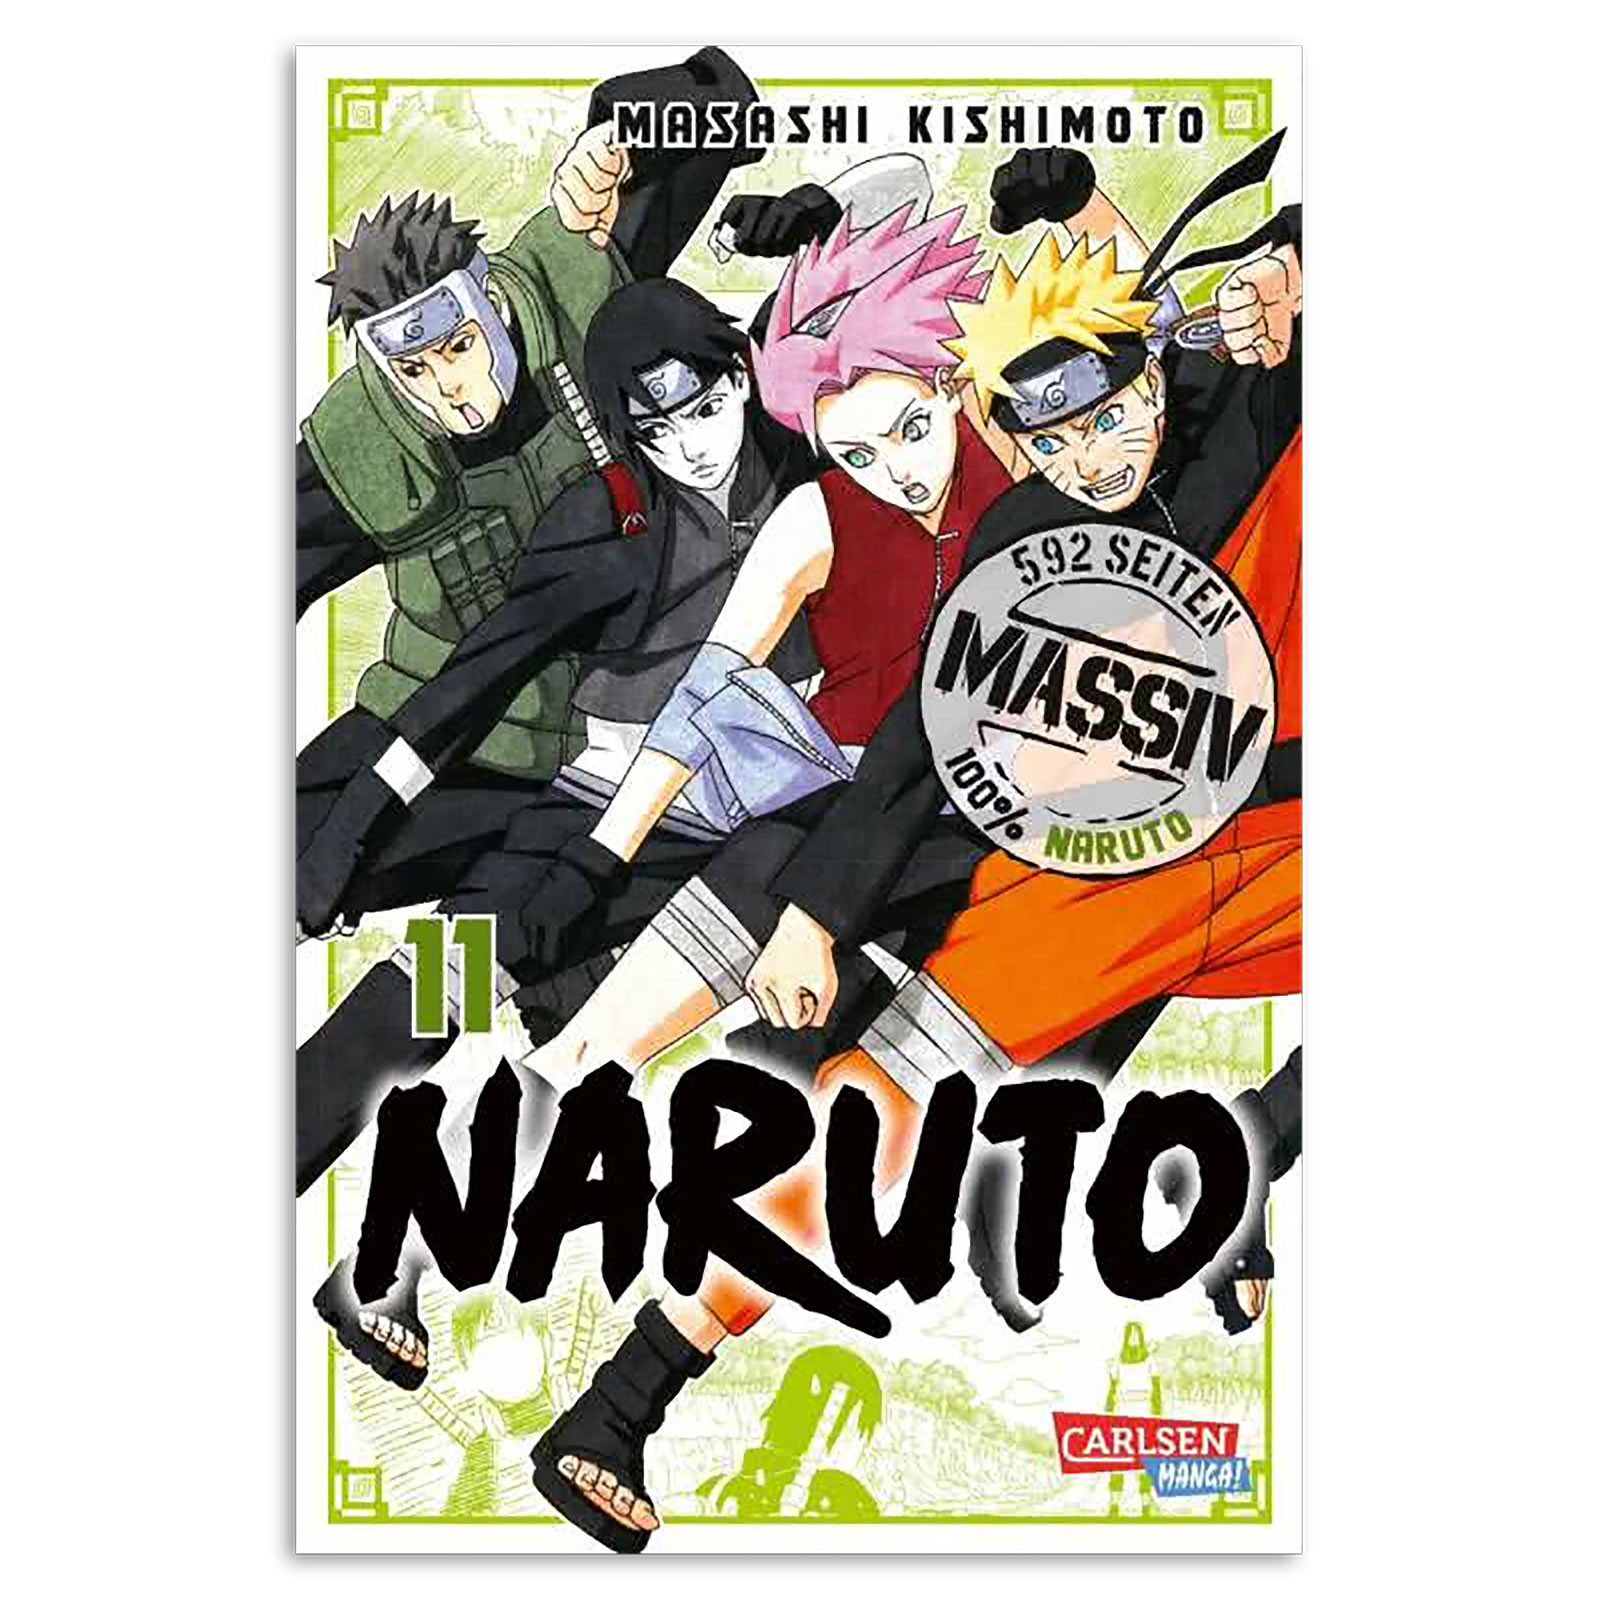 Naruto - Collection Volume 11 Paperback